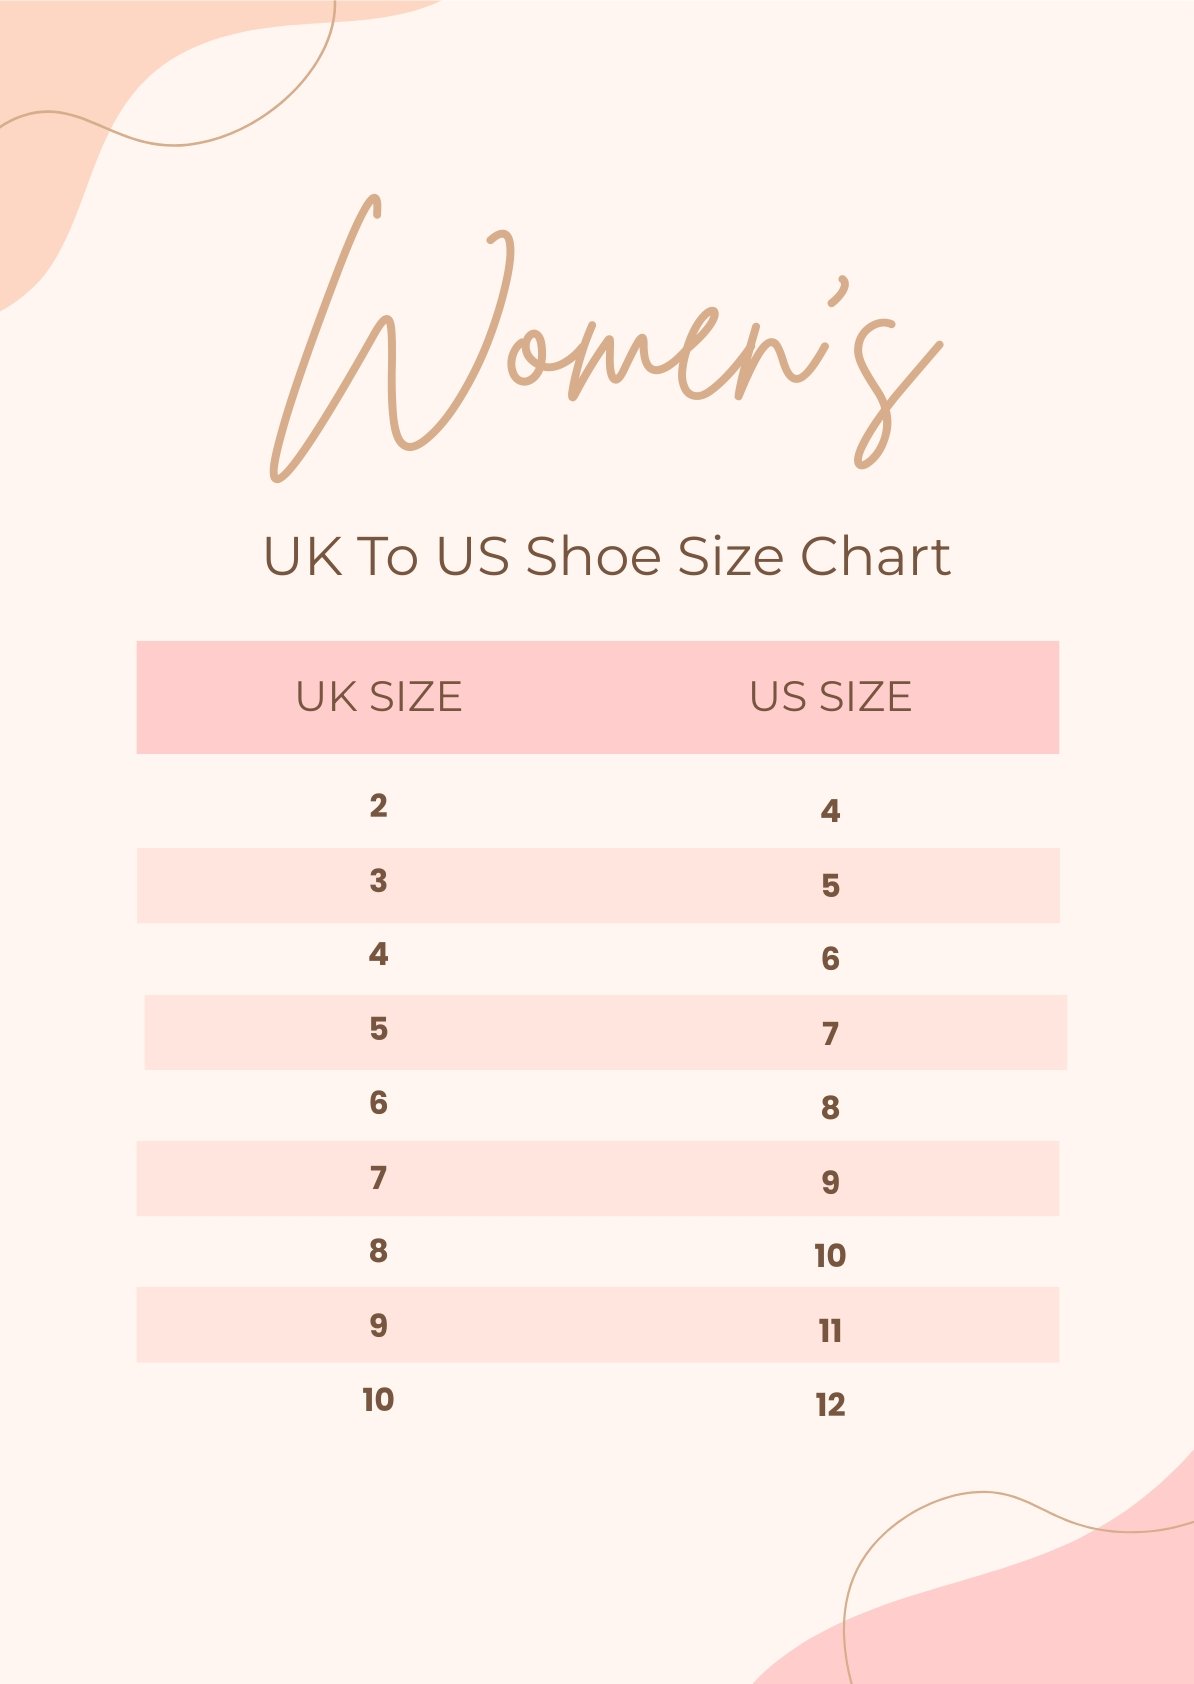 Free Women's Uk To Us Shoe Size Chart in PDF, Illustrator